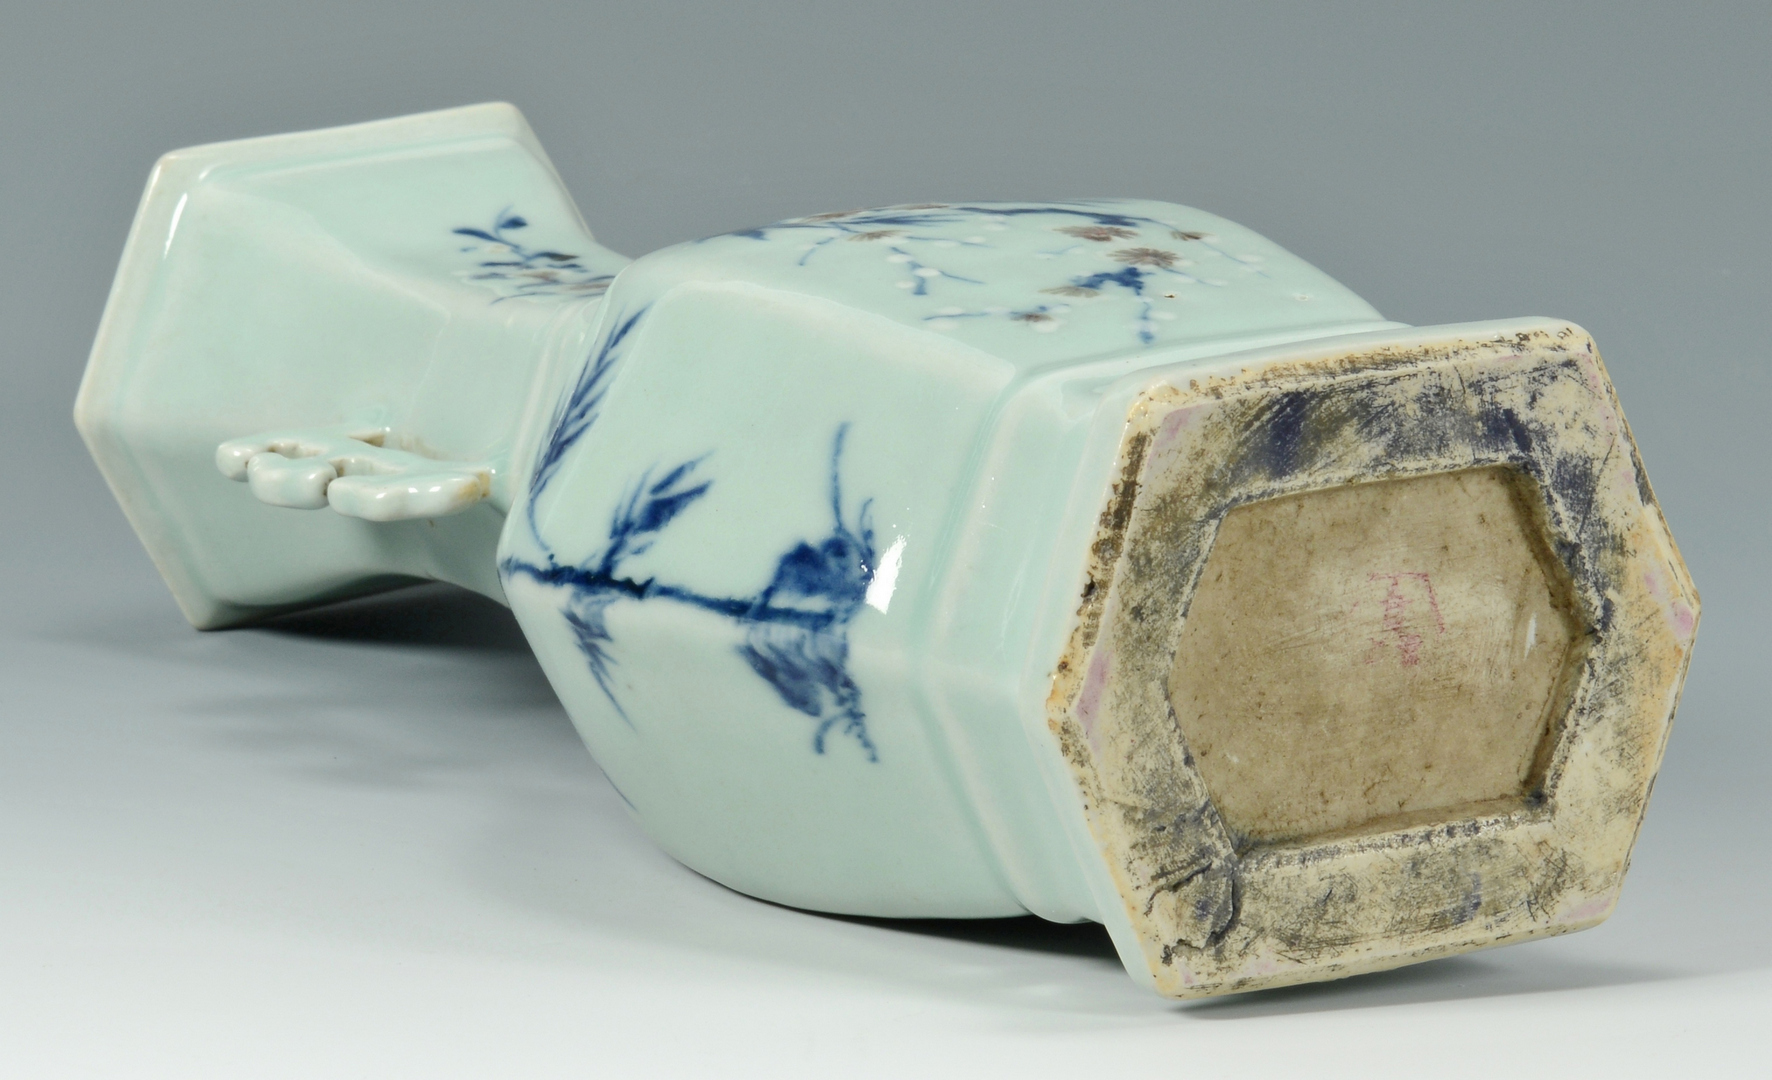 Lot 3088092: Chinese Republic Period Vase